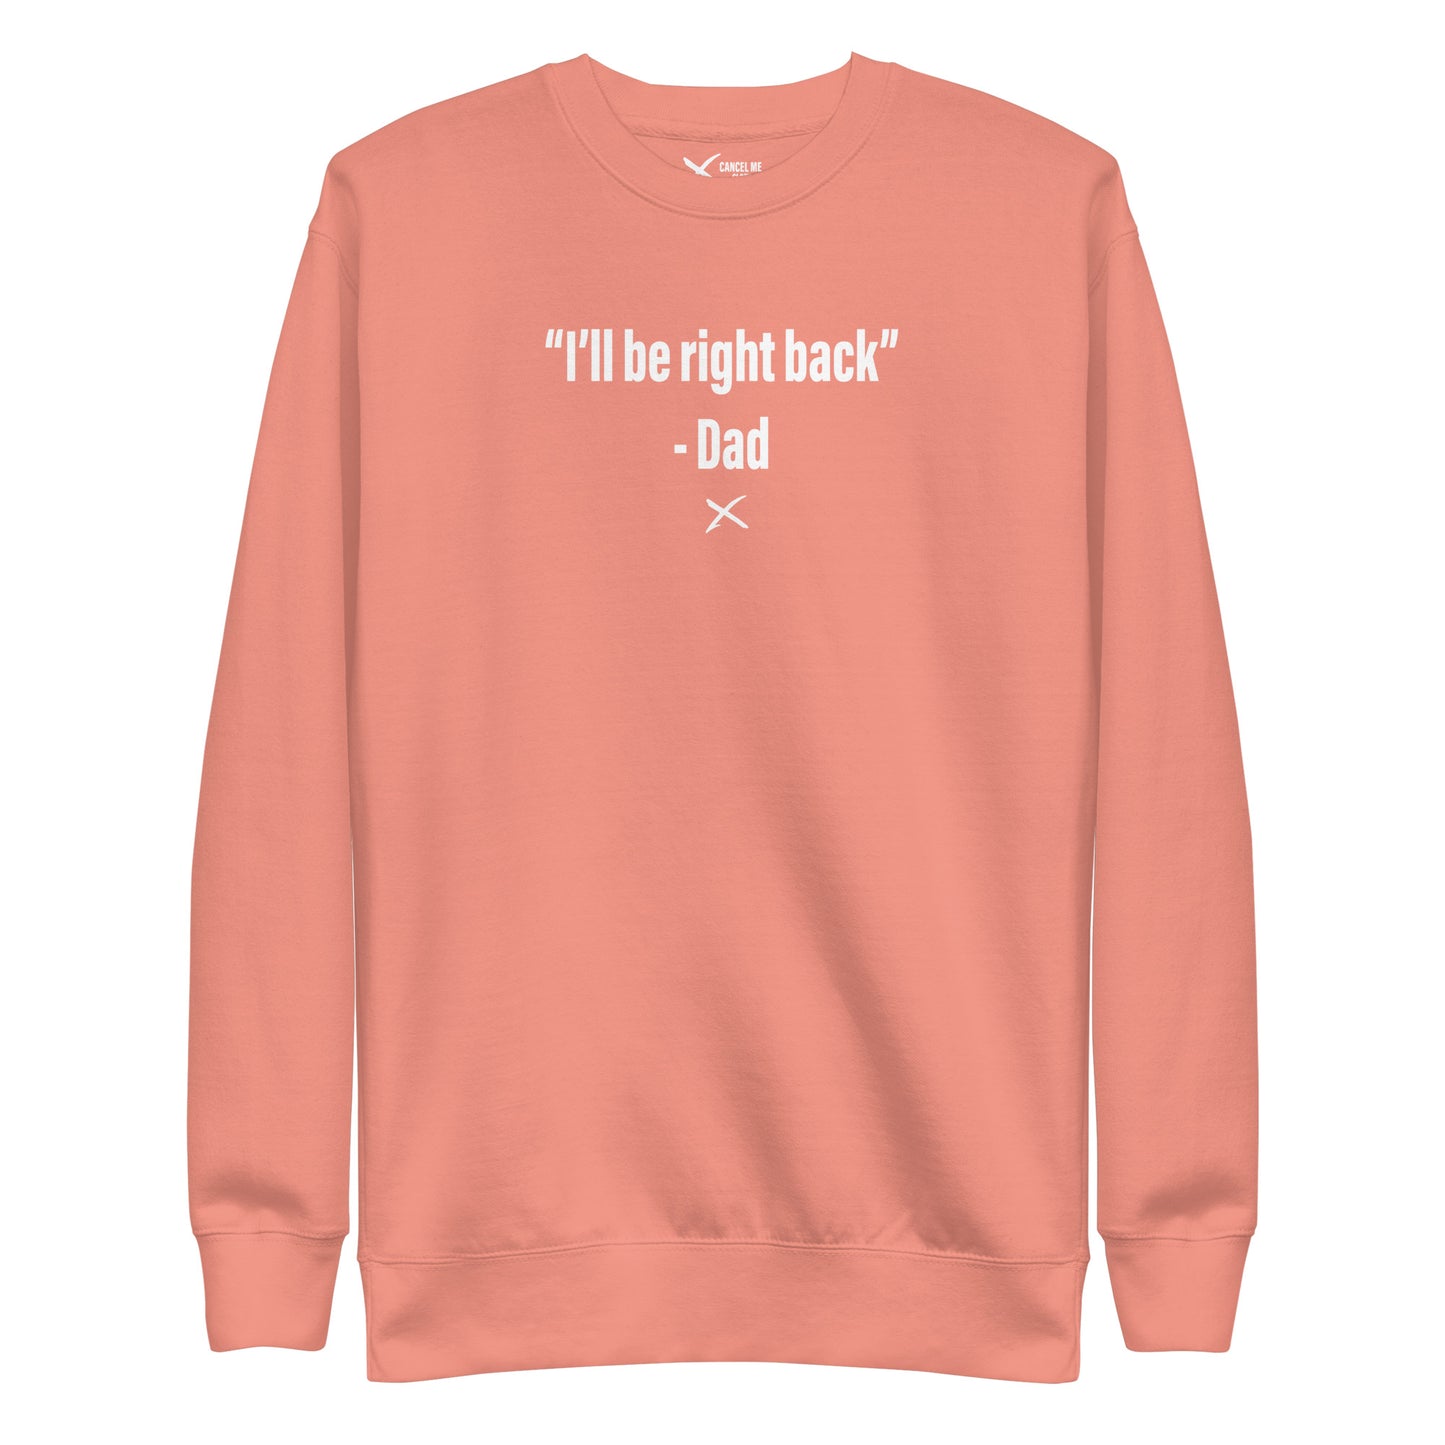 "I'll be right back" - Dad - Sweatshirt